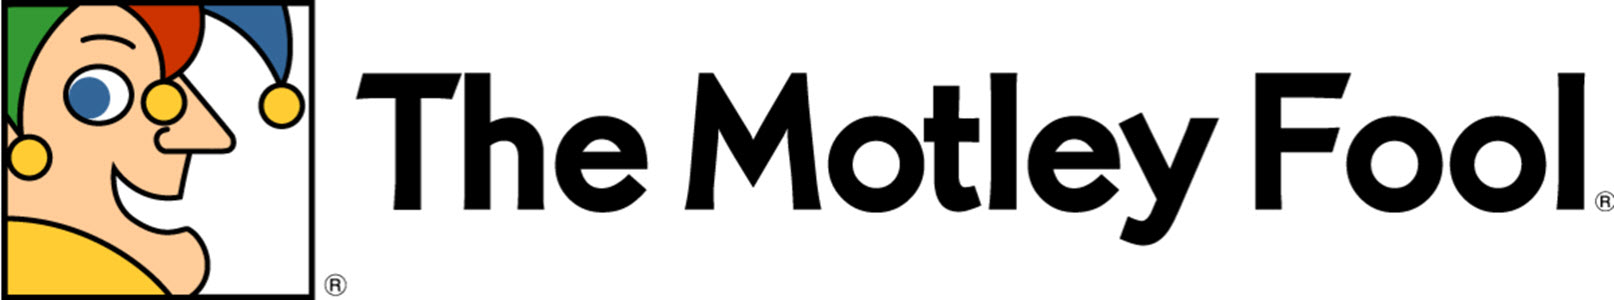 Motley Fool logo